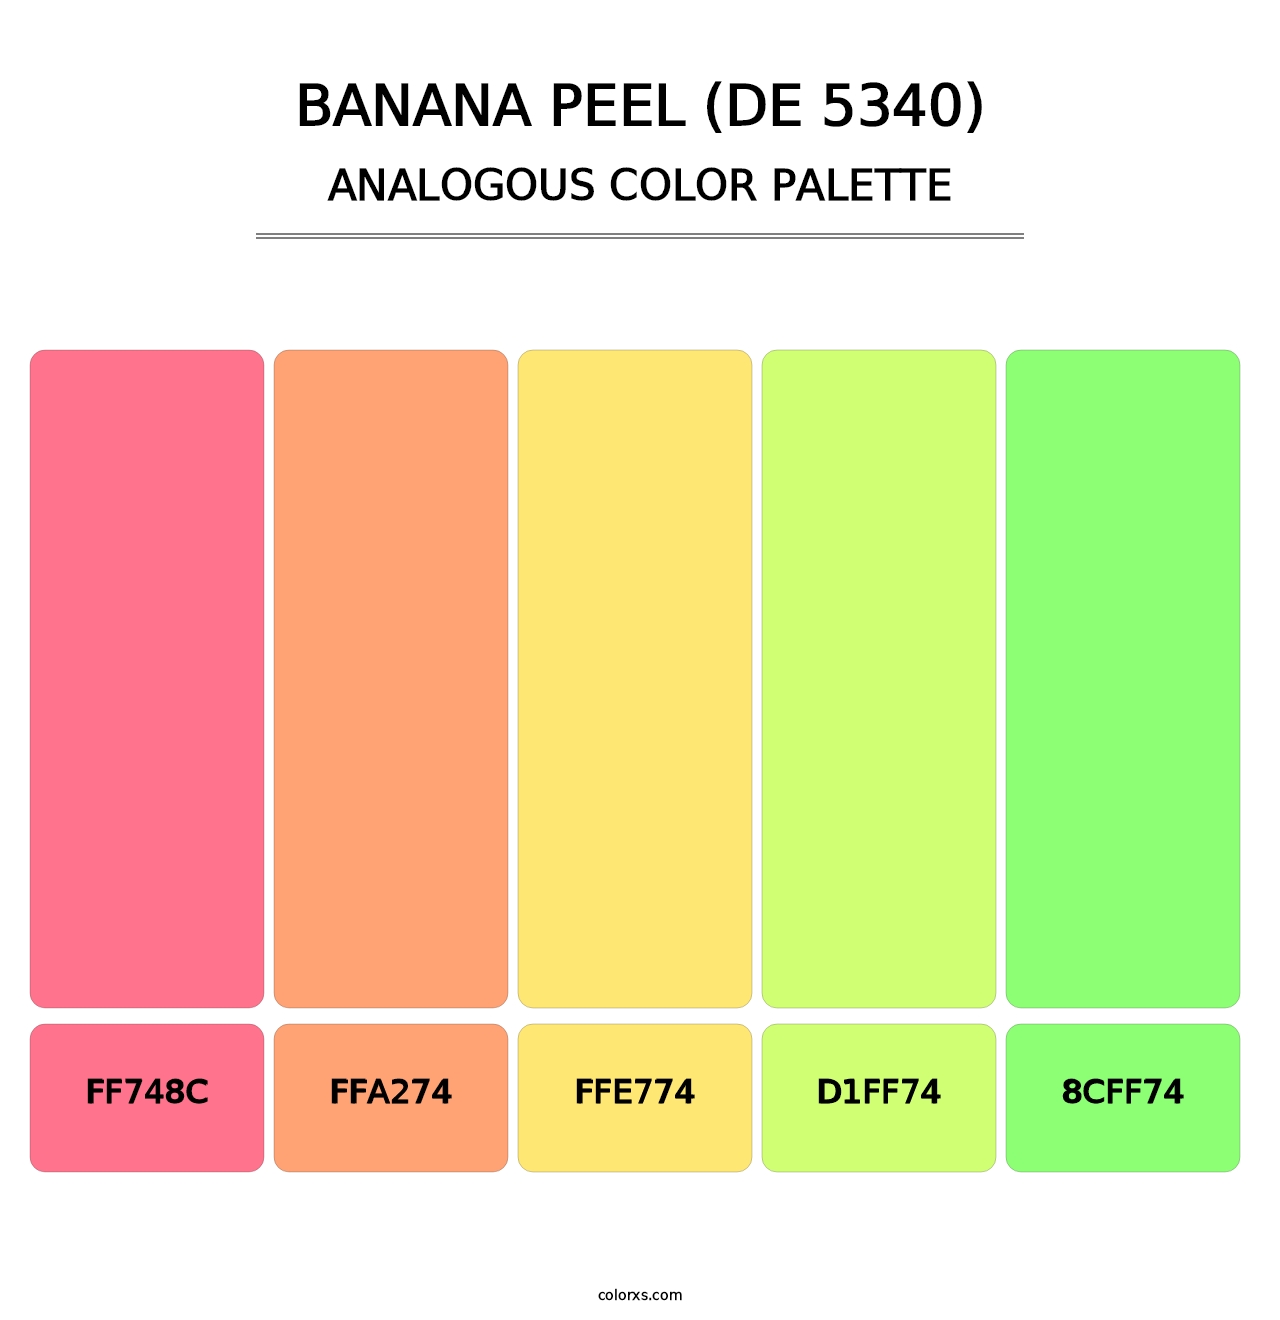 Banana Peel (DE 5340) - Analogous Color Palette